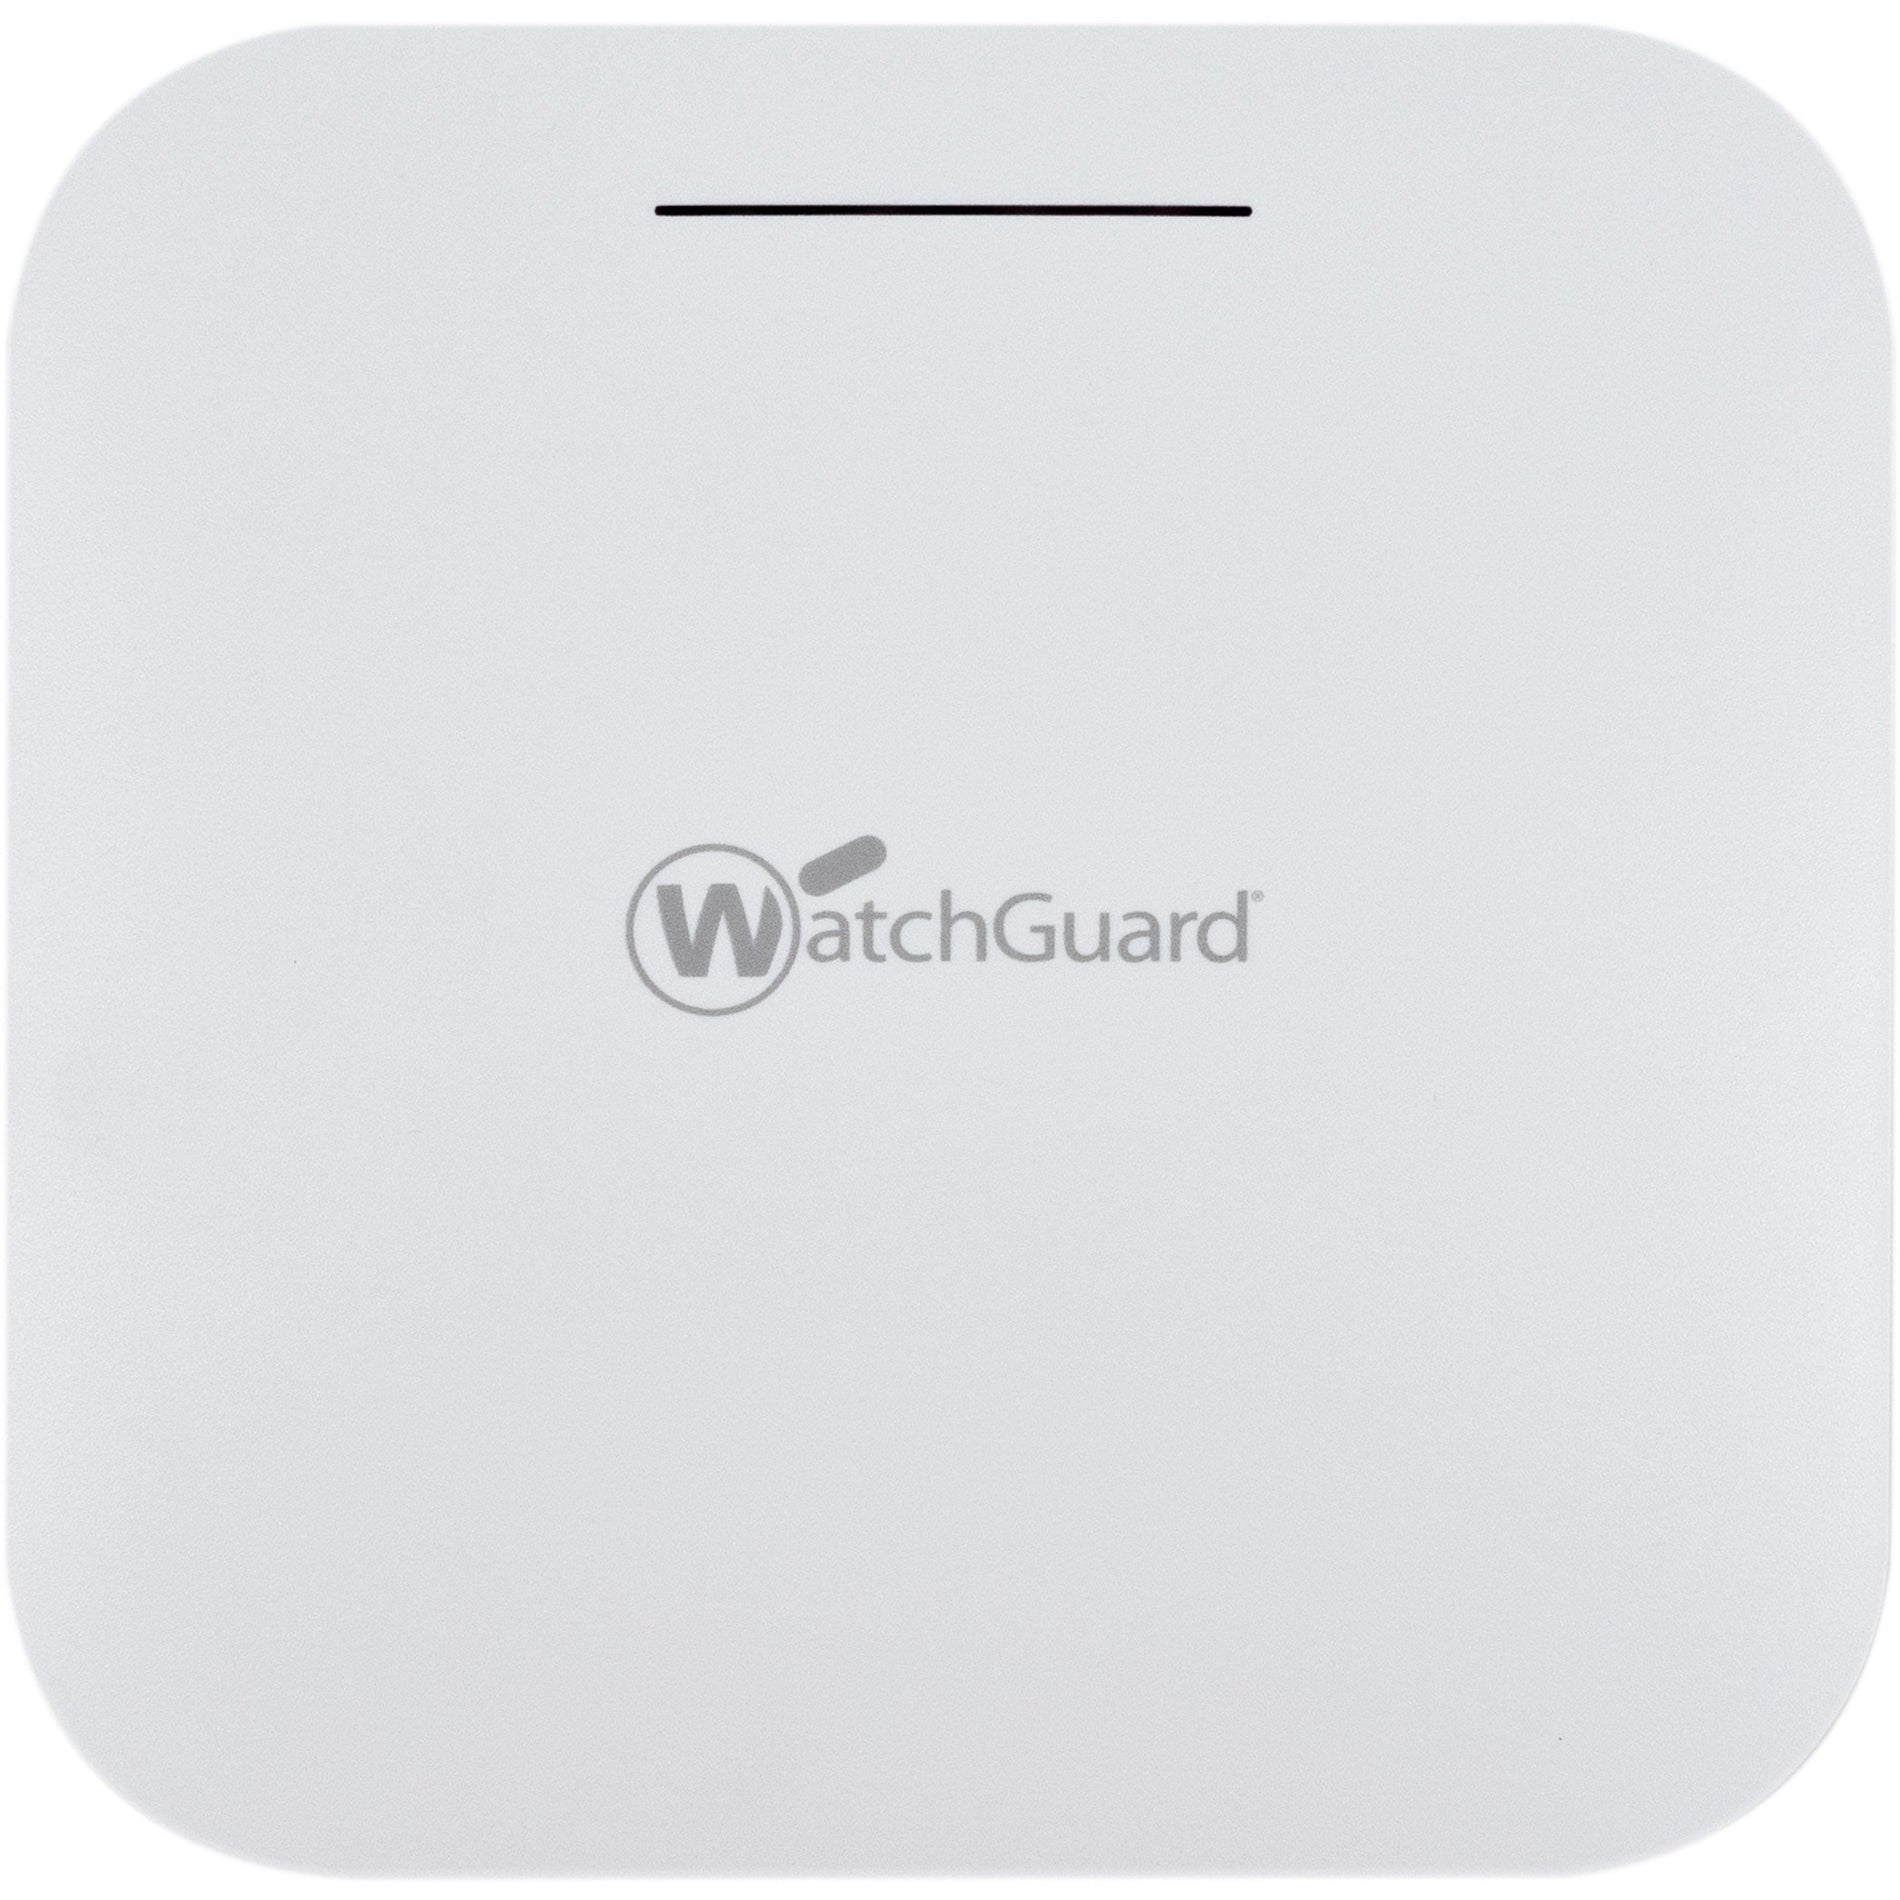 WatchGuard WGA13000000 AP130 Indoor Access Point, Dual Band 802.11ax 1.73 Gbit/s Wireless, Gigabit Ethernet